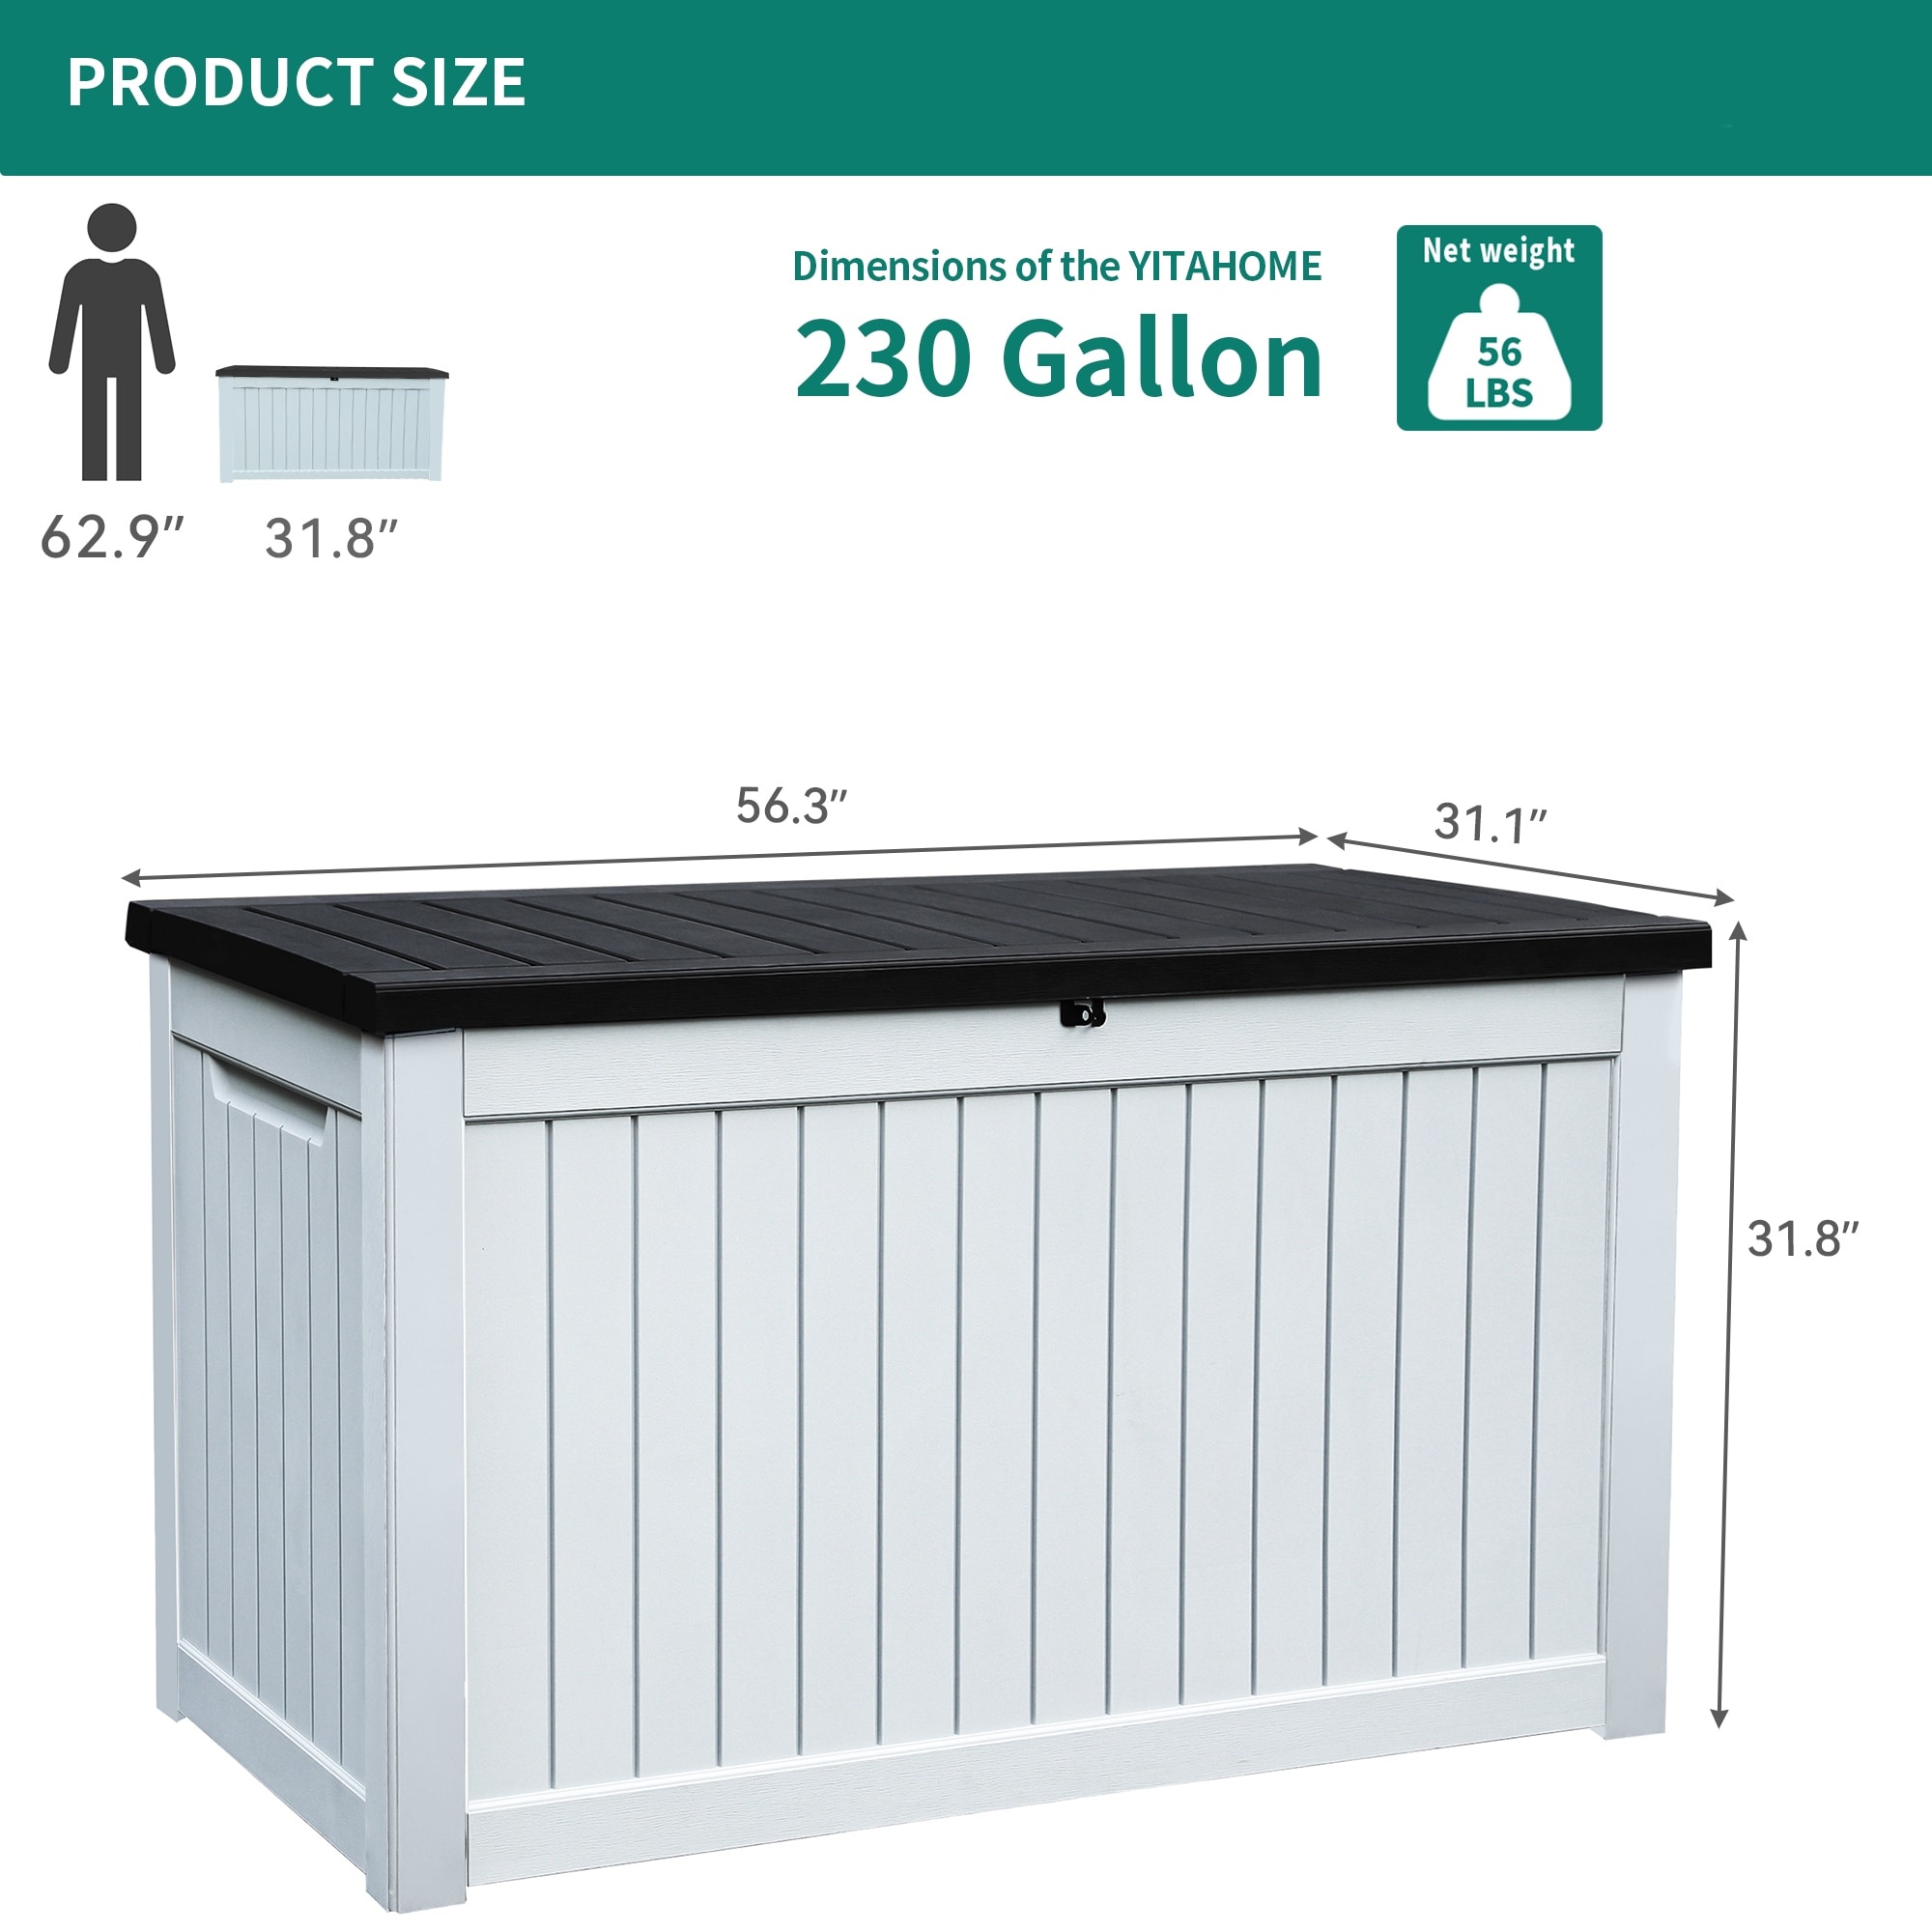 Yitahome  200 Gallon Large Deck Box Rattan Outdoor Storage